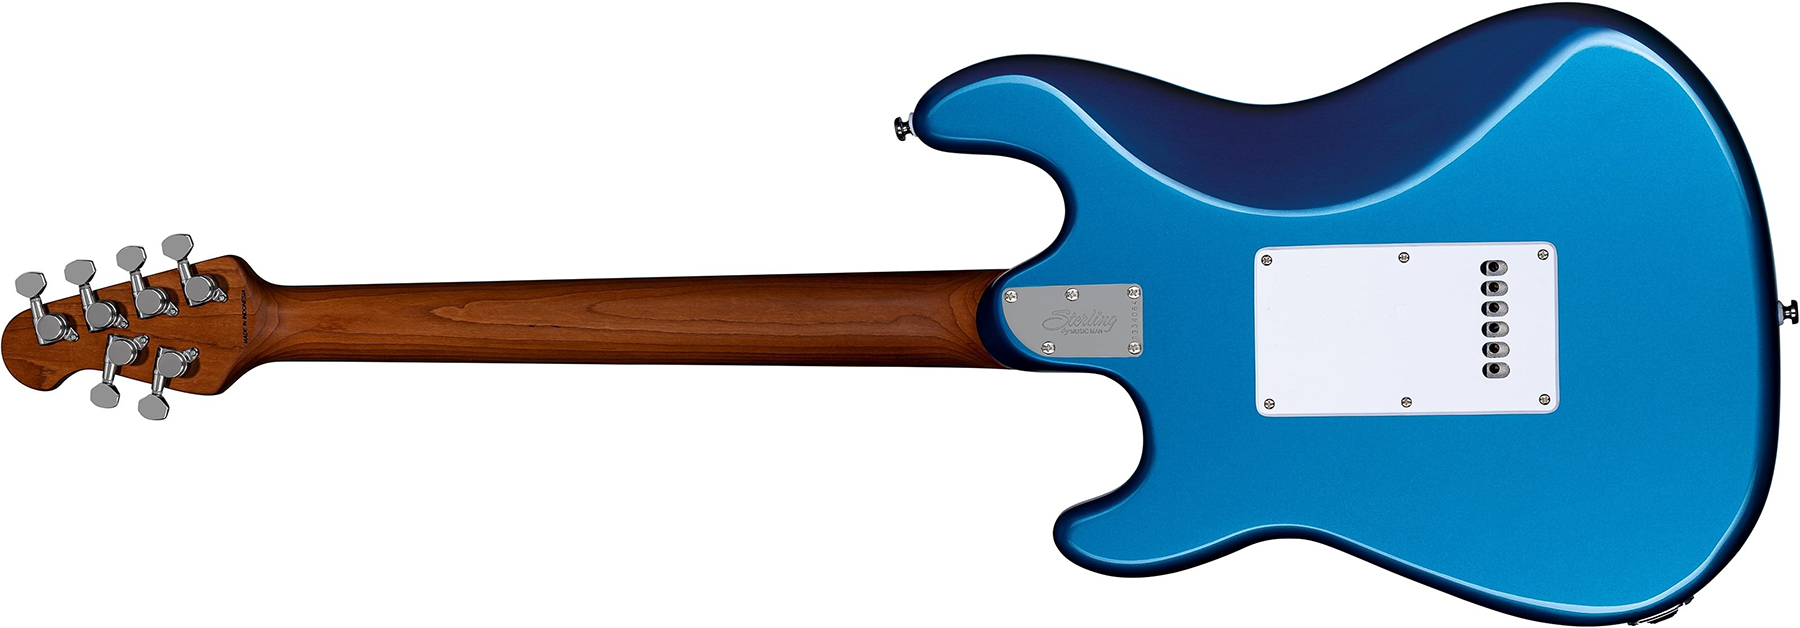 Sterling By Musicman Cutlass Ct50sss 3s Trem Rw - Toluca Lake Blue - Str shape electric guitar - Variation 1